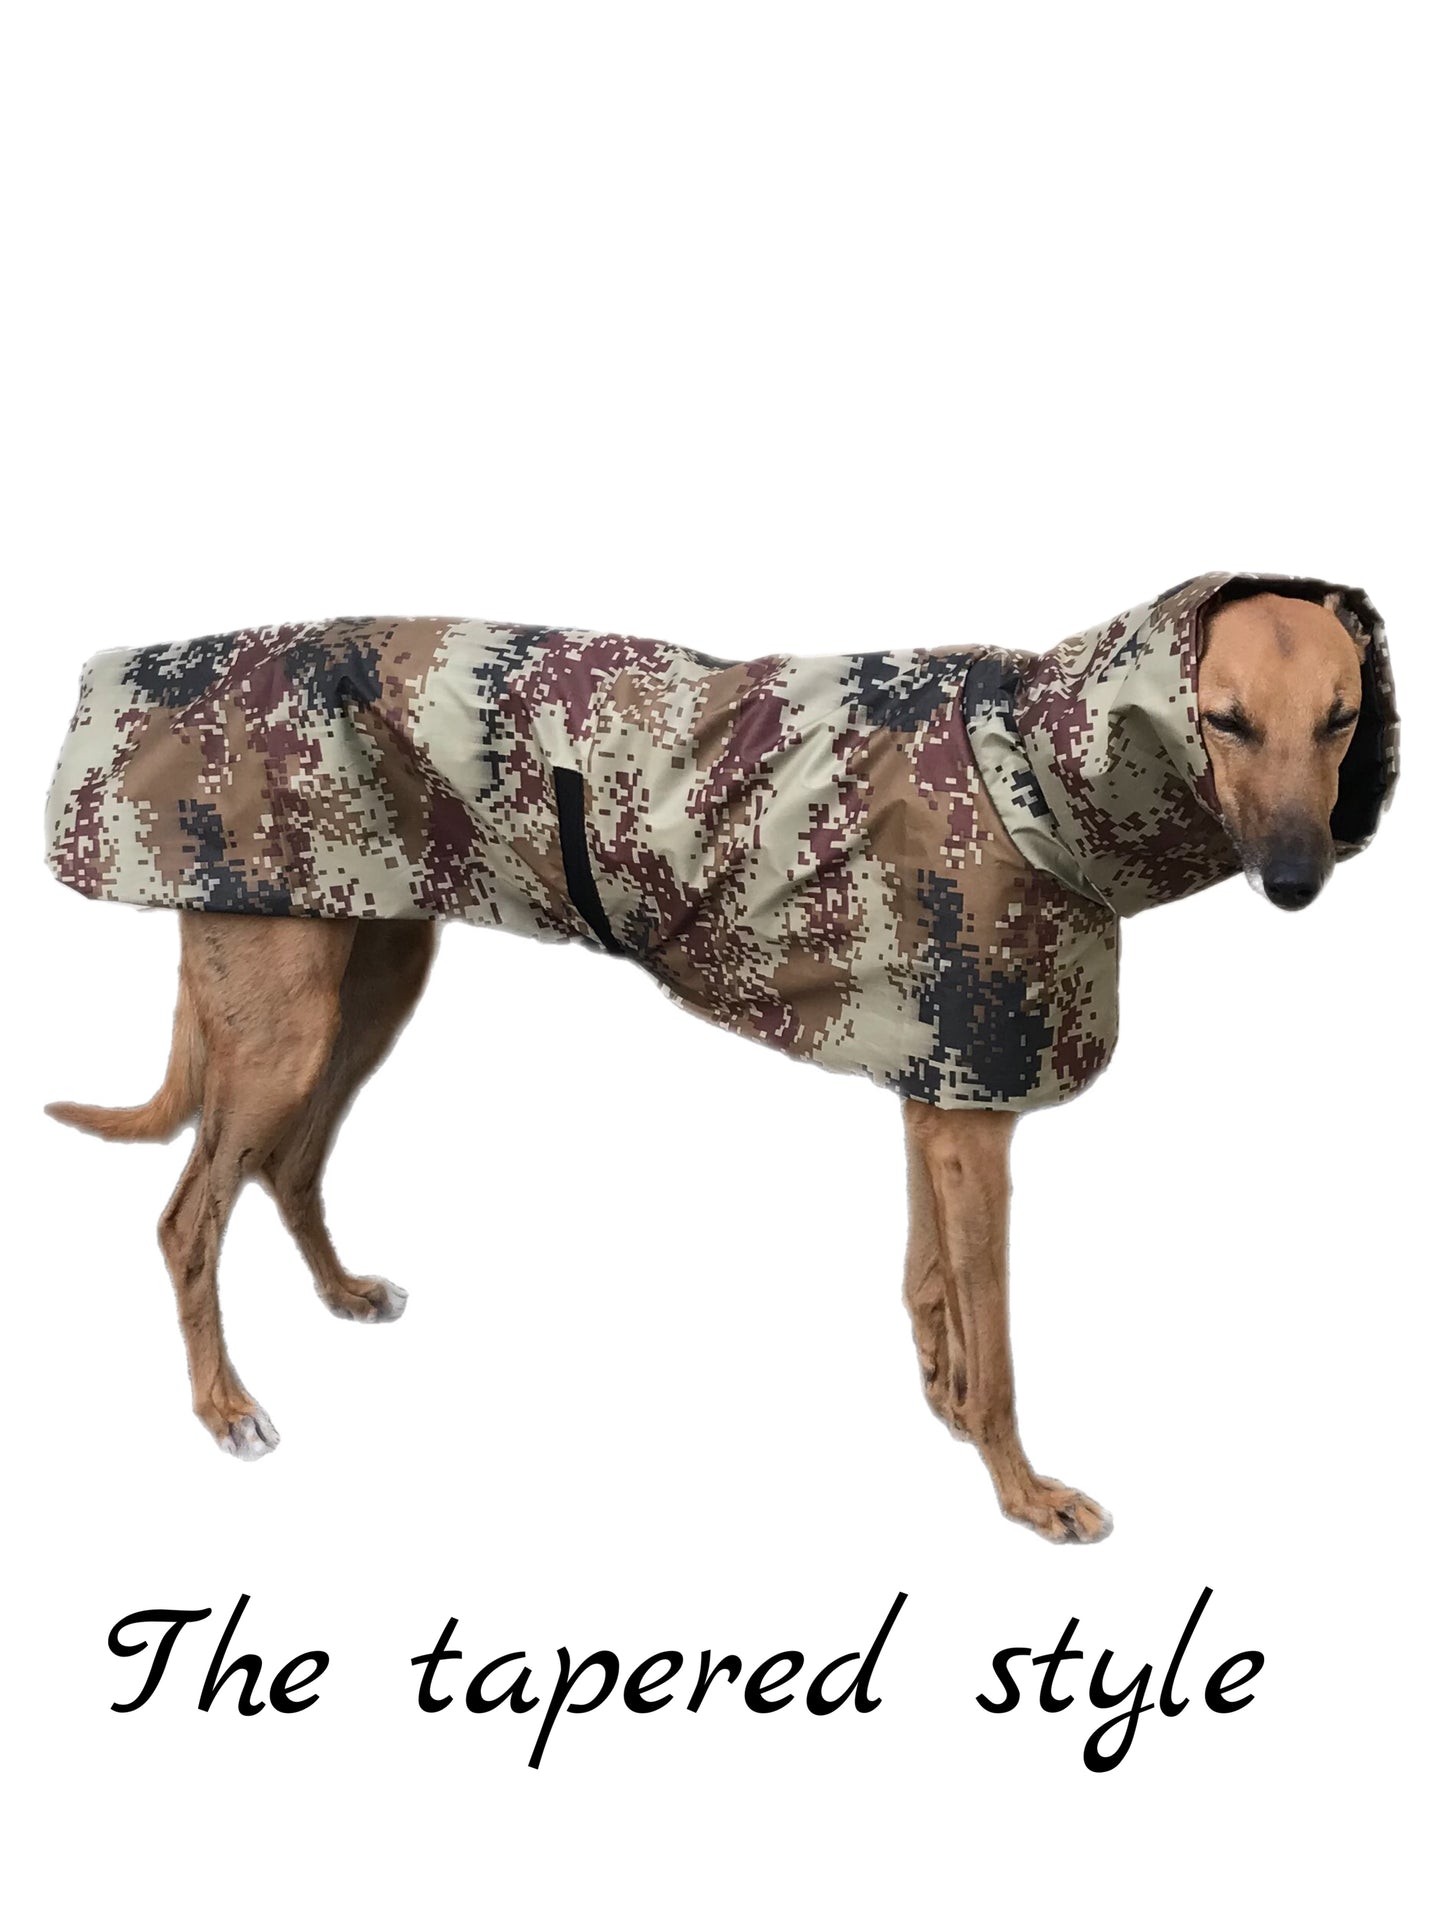 Techno cammo Summer rainwear Greyhound coat deluxe style, ultra lightweight,  washable